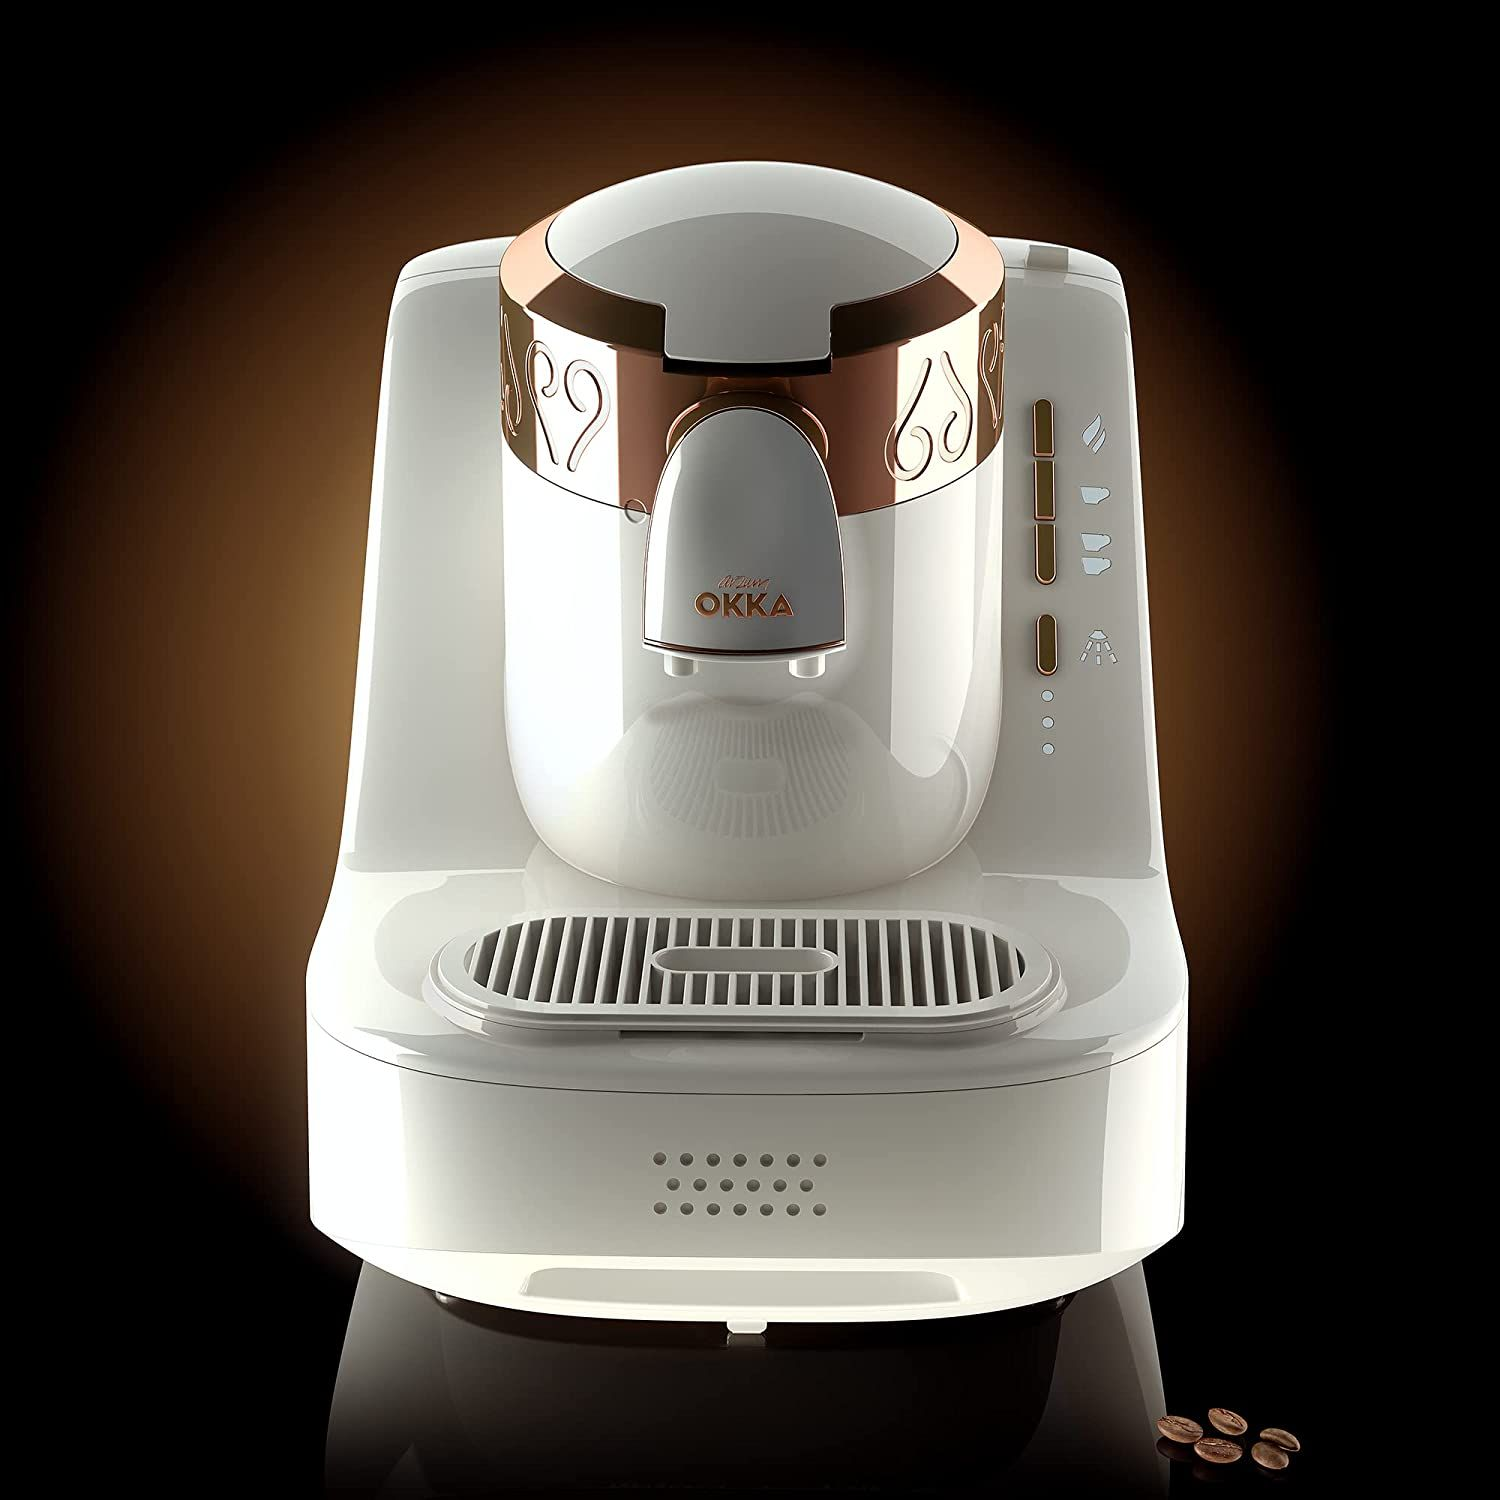 ARZUM 710W Kaffeekanne Kaffeemaschine Weiß